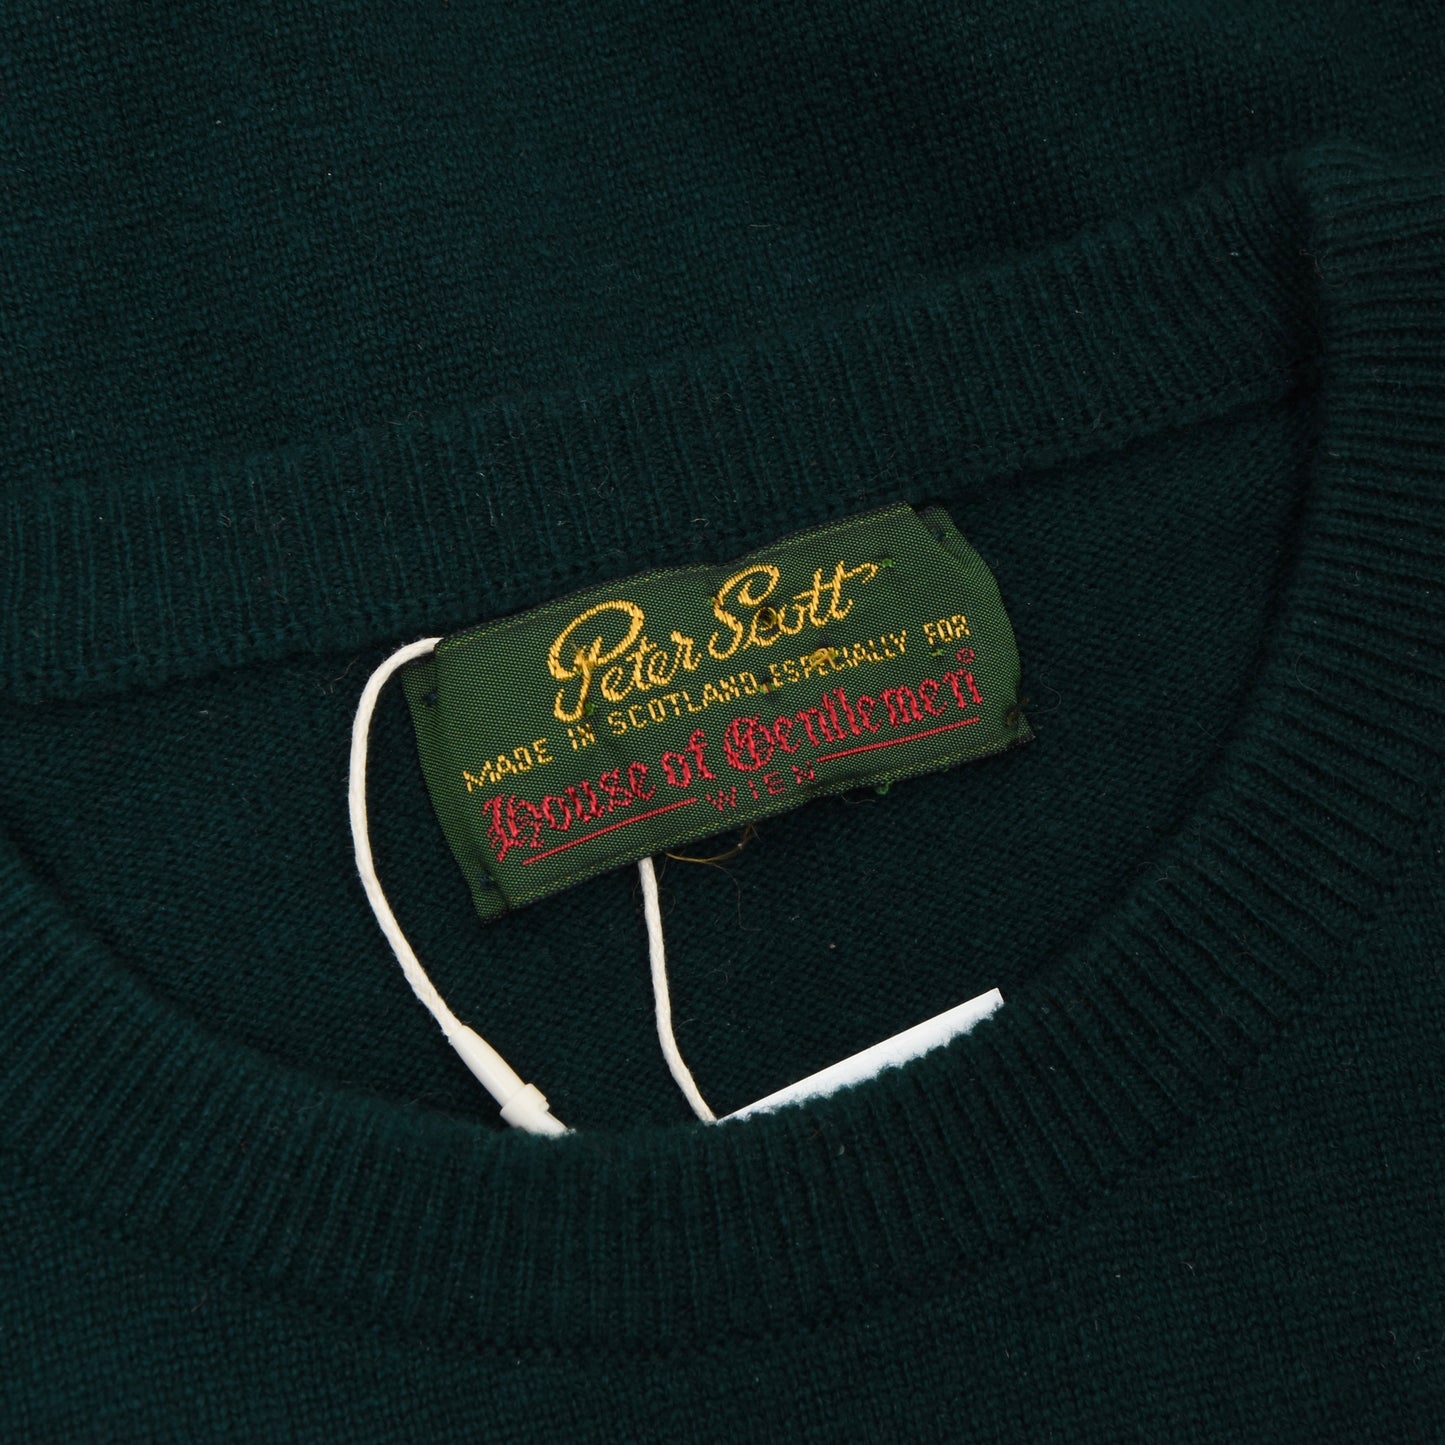 Peter Scott 100% Cashmere Sweater Size UK40 Chest ca. 54cm - Green